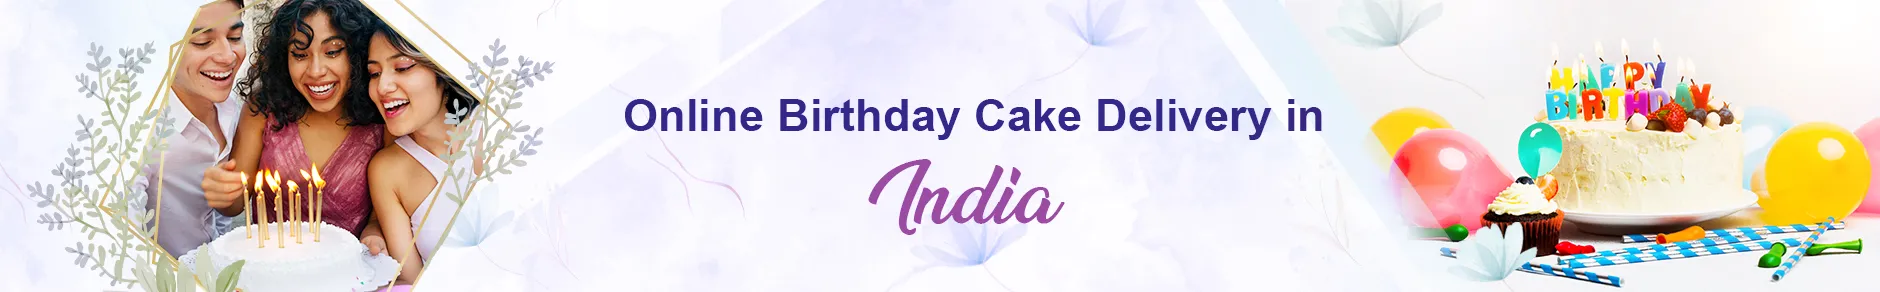 Send Birthday Cakes to India